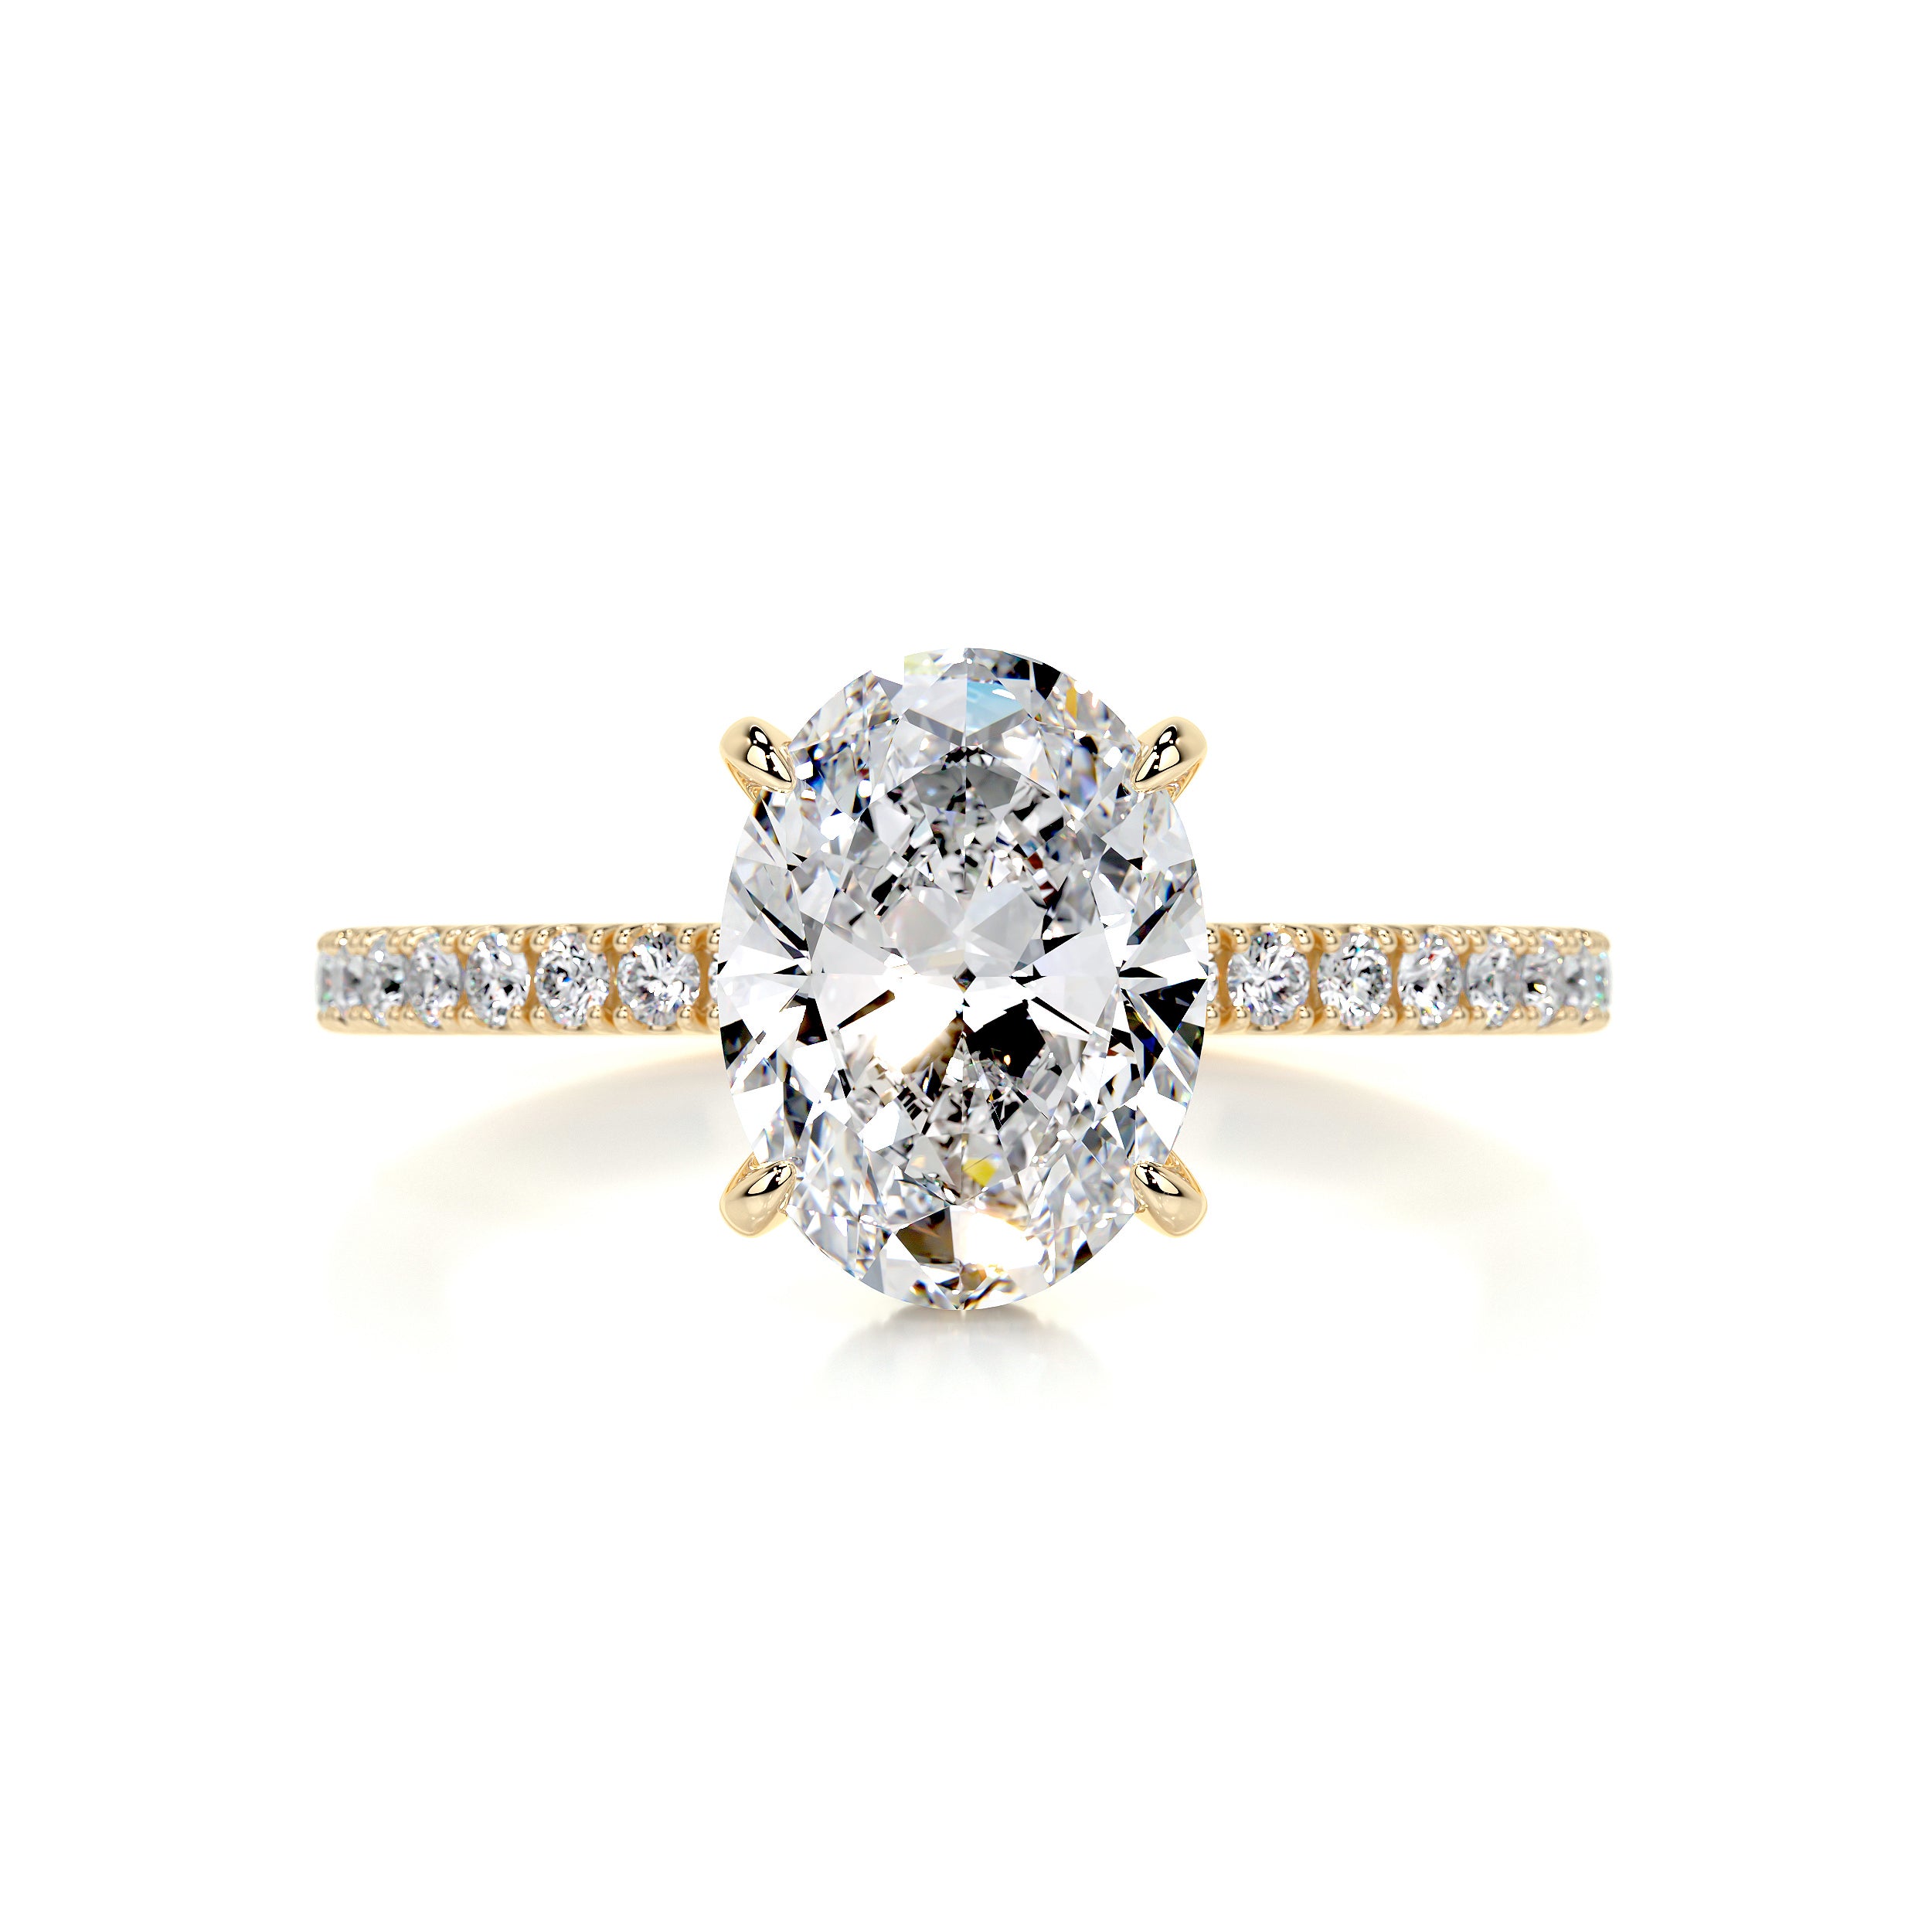 Lucy Diamond Engagement Ring   (2 Carat) -18K Yellow Gold